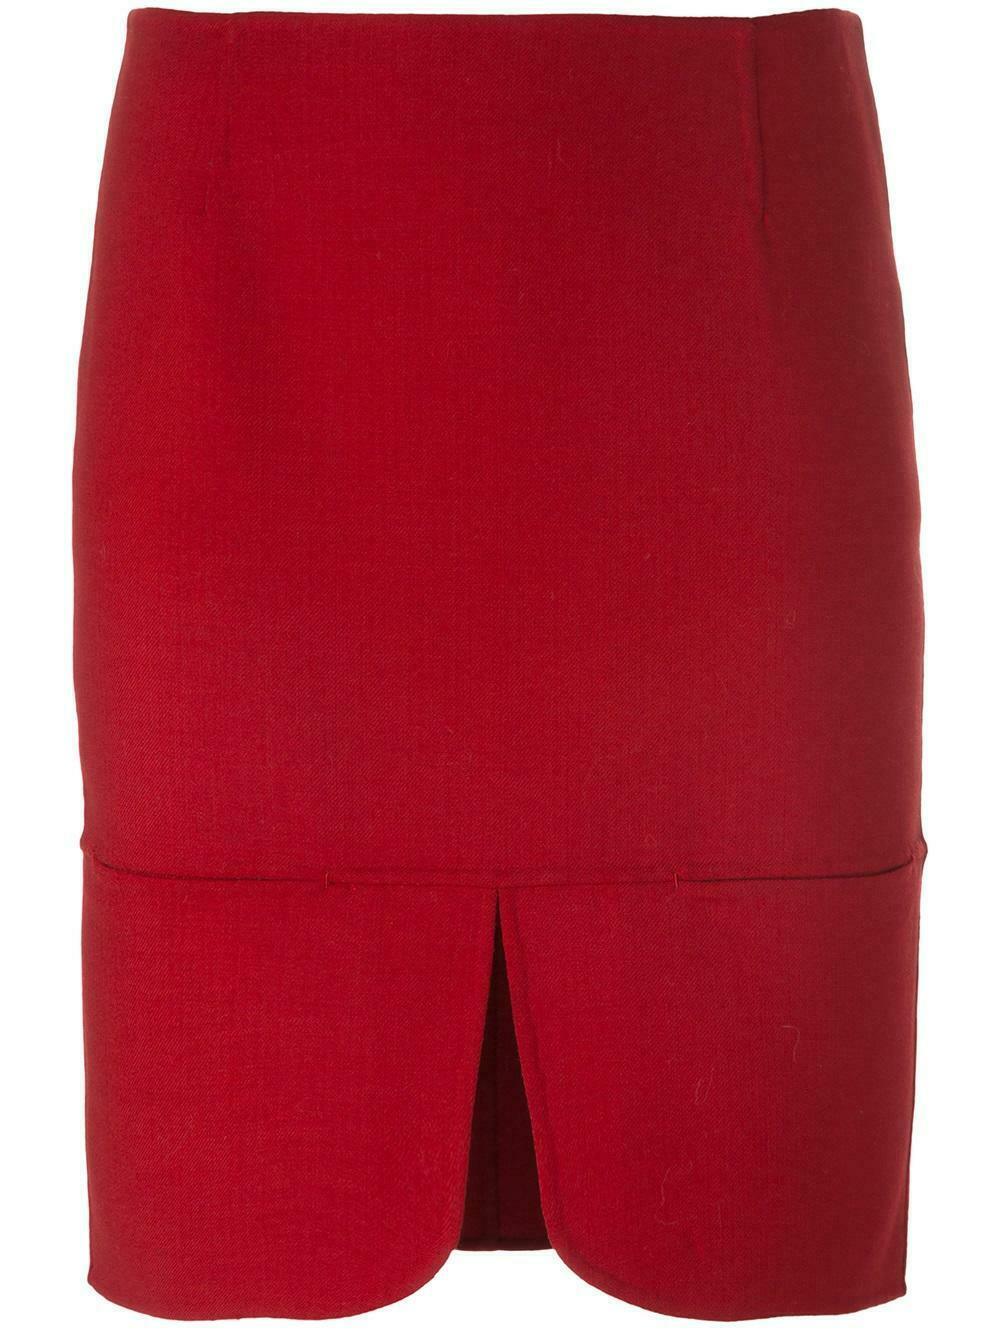 DKNY Front Slit Skirt 618 SCARLET Women Straight Wool Skirt Size 8 - SVNYFancy